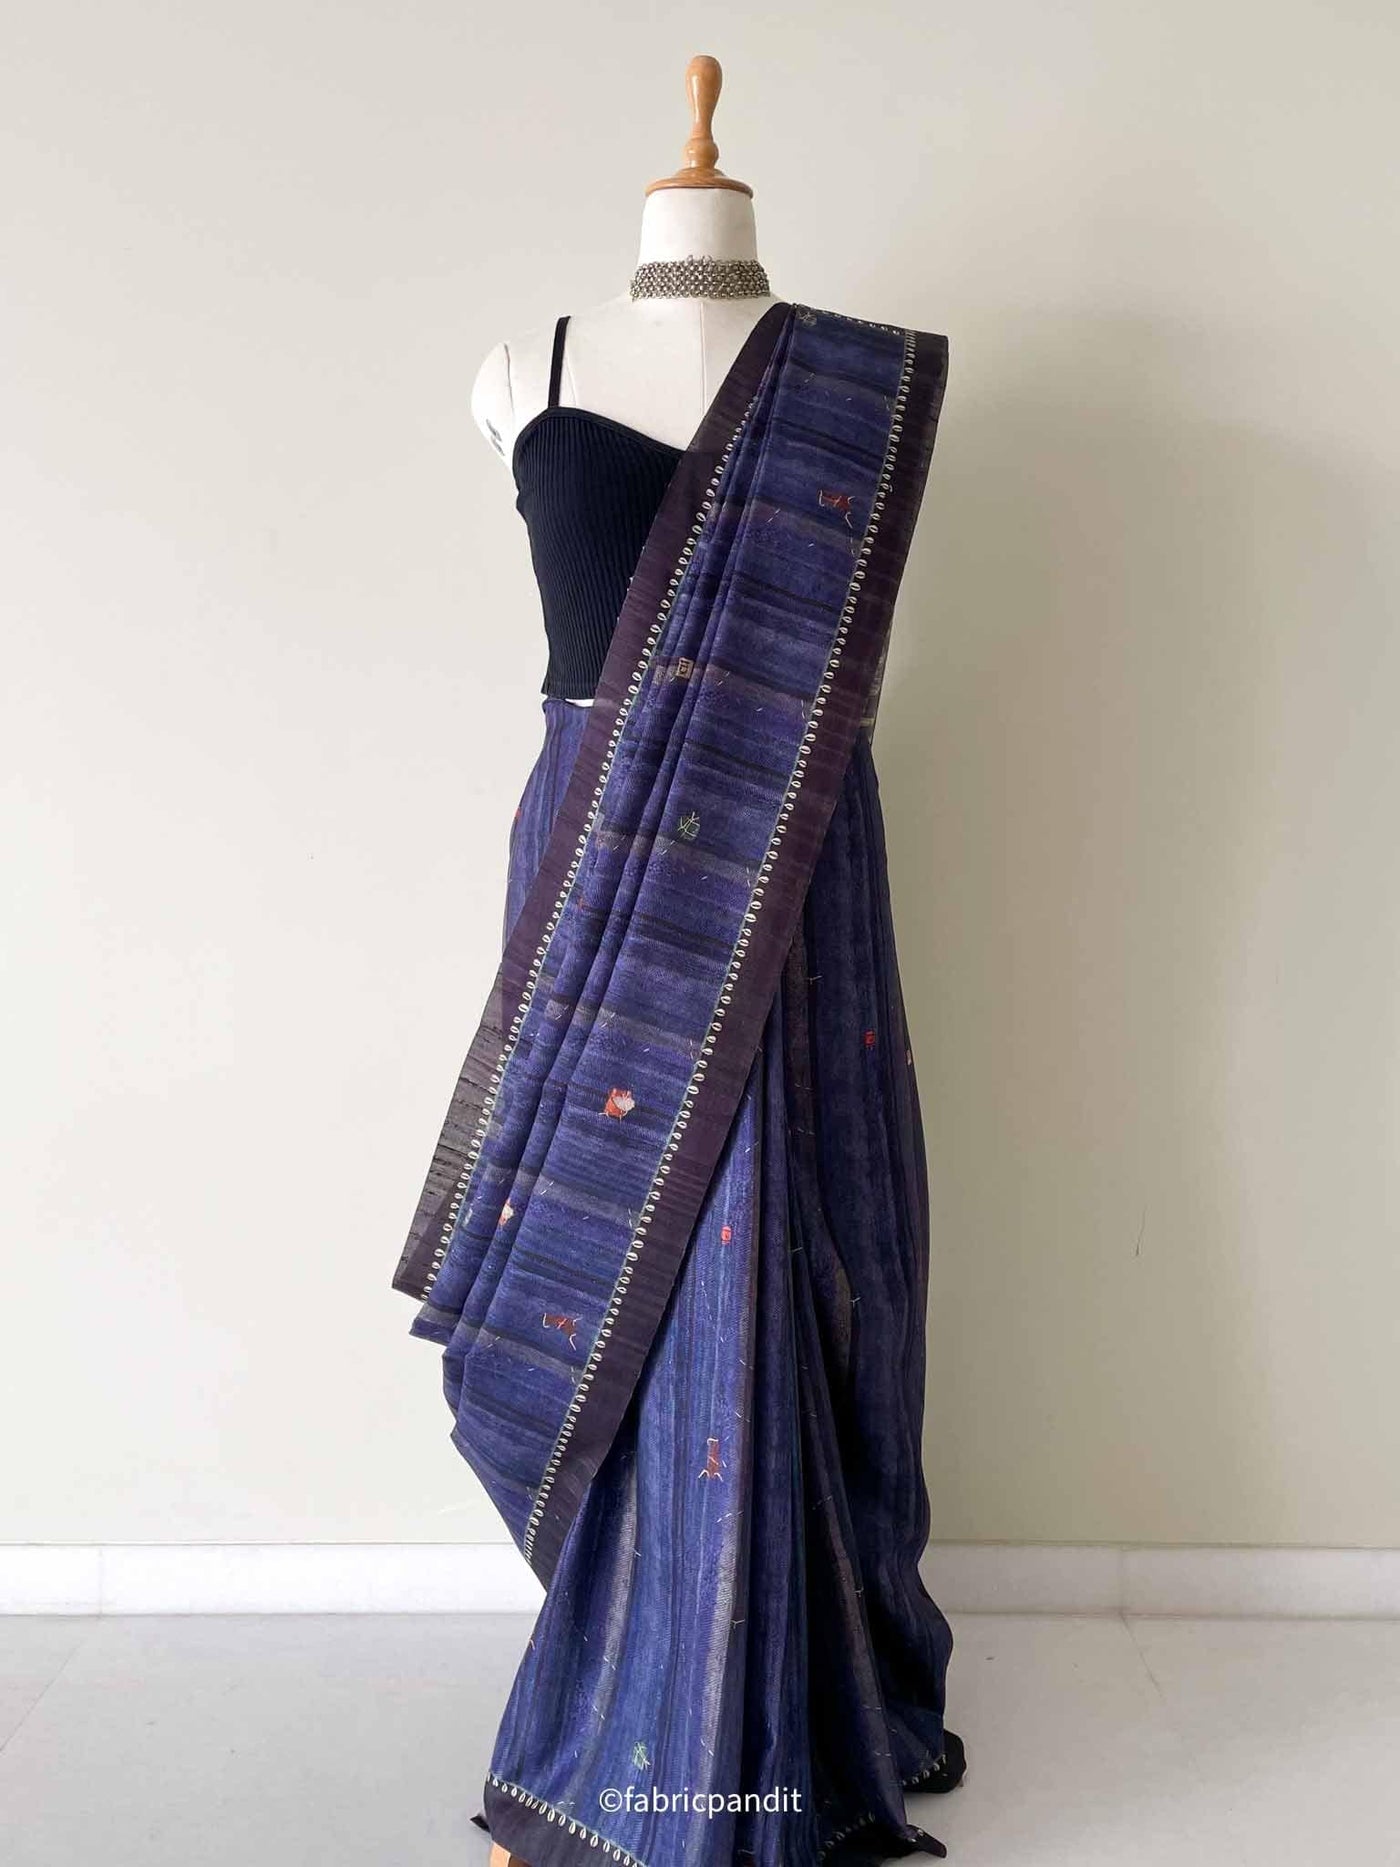 Fabric Pandit Saree Dusty Violet and Black Applique Pattern Digital Printed Dhakkai Tussar Silk Kothapatti Saree